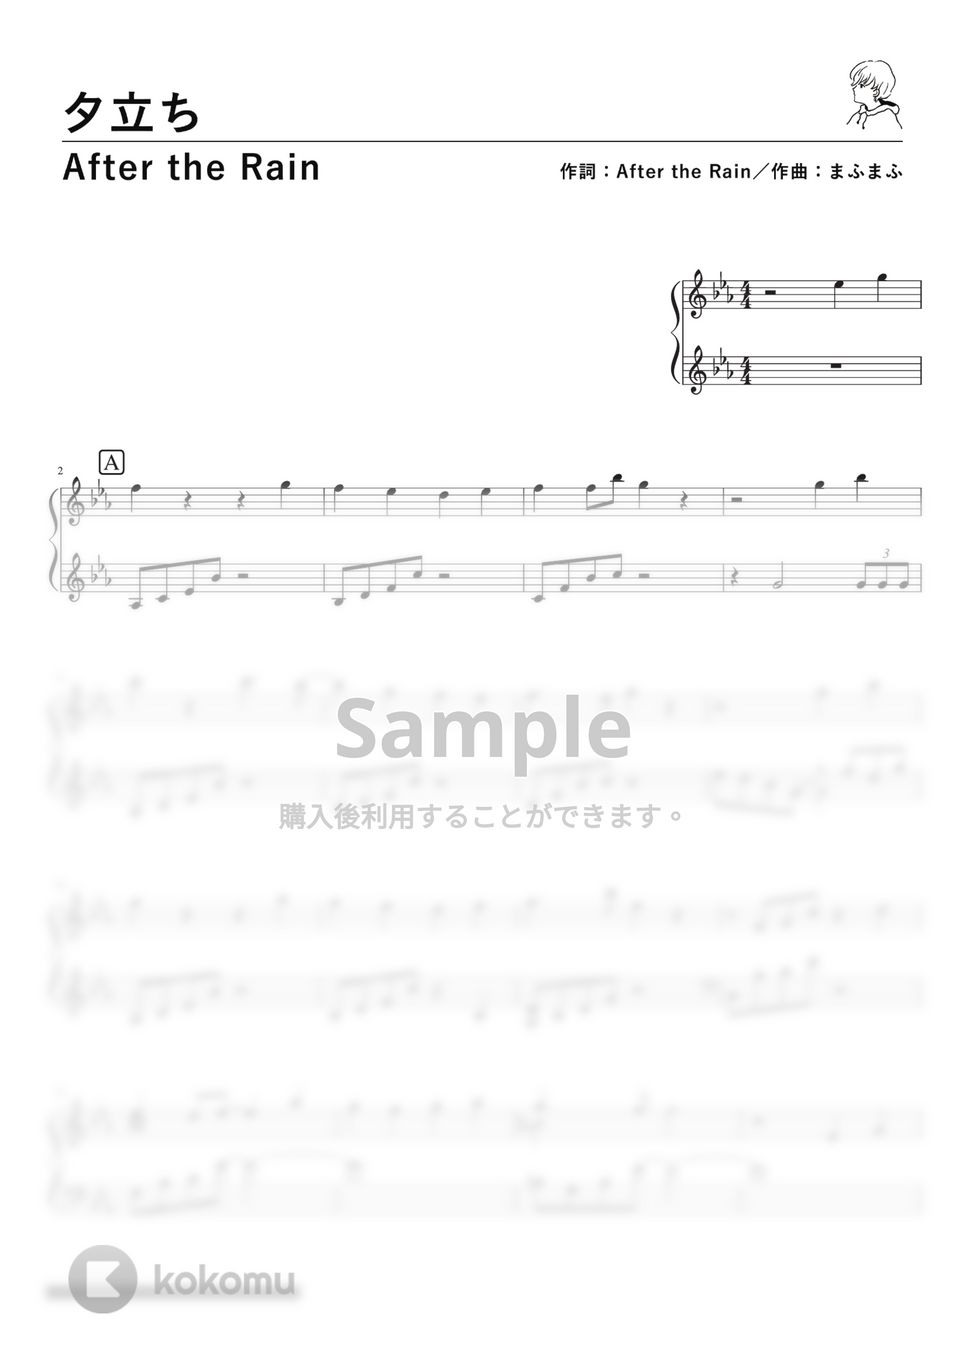 After the Rain(そらる×まふまふ) - 夕立ち (PianoSolo) by 深根 / Fukane